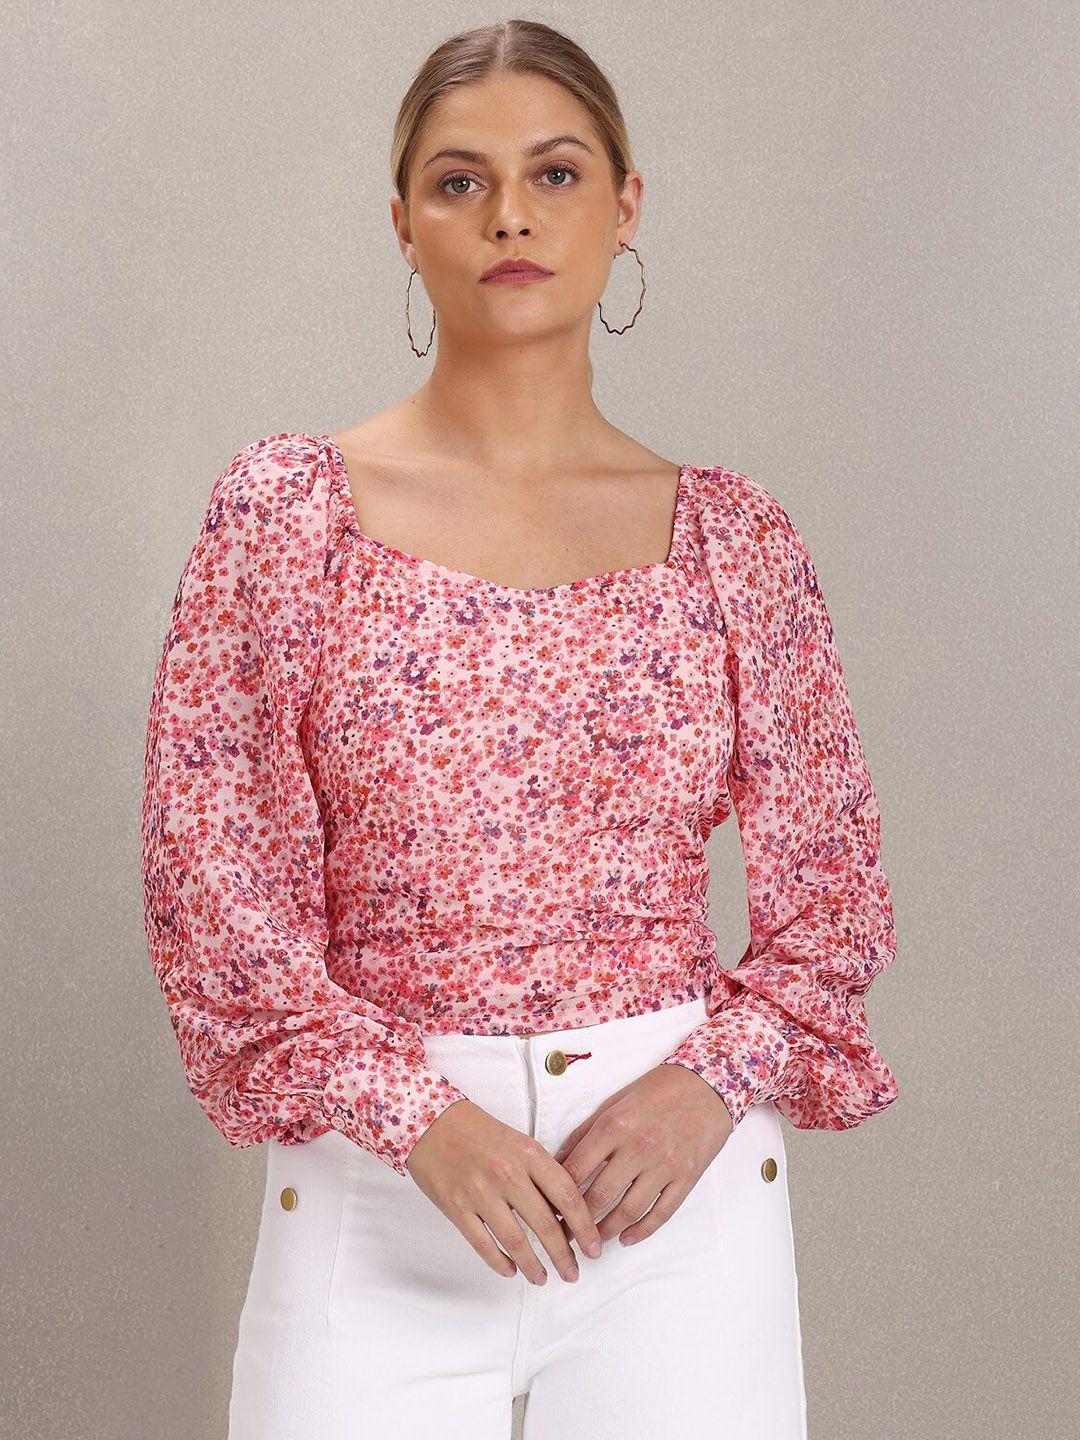 u.s. polo assn. women pink floral print georgette top